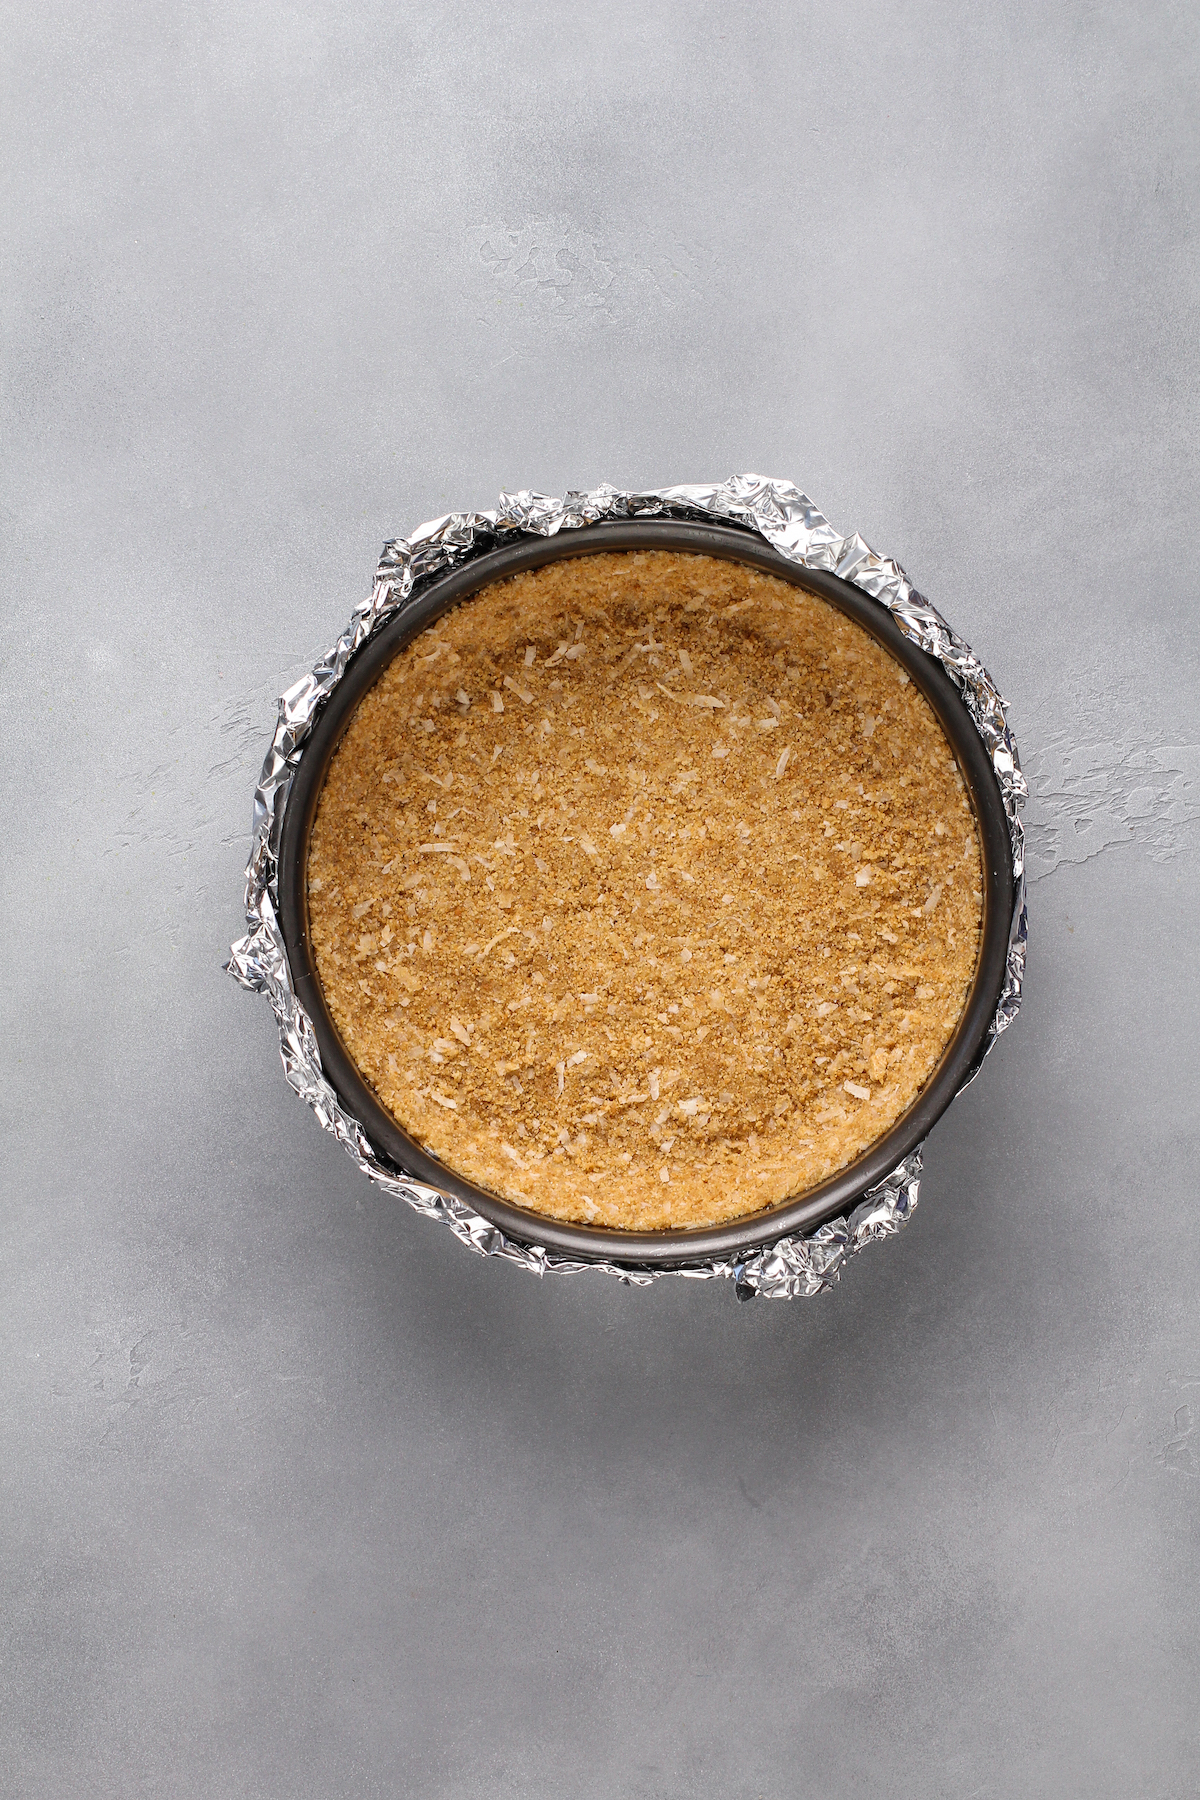 A graham cracker crust pressed into a springform pan.